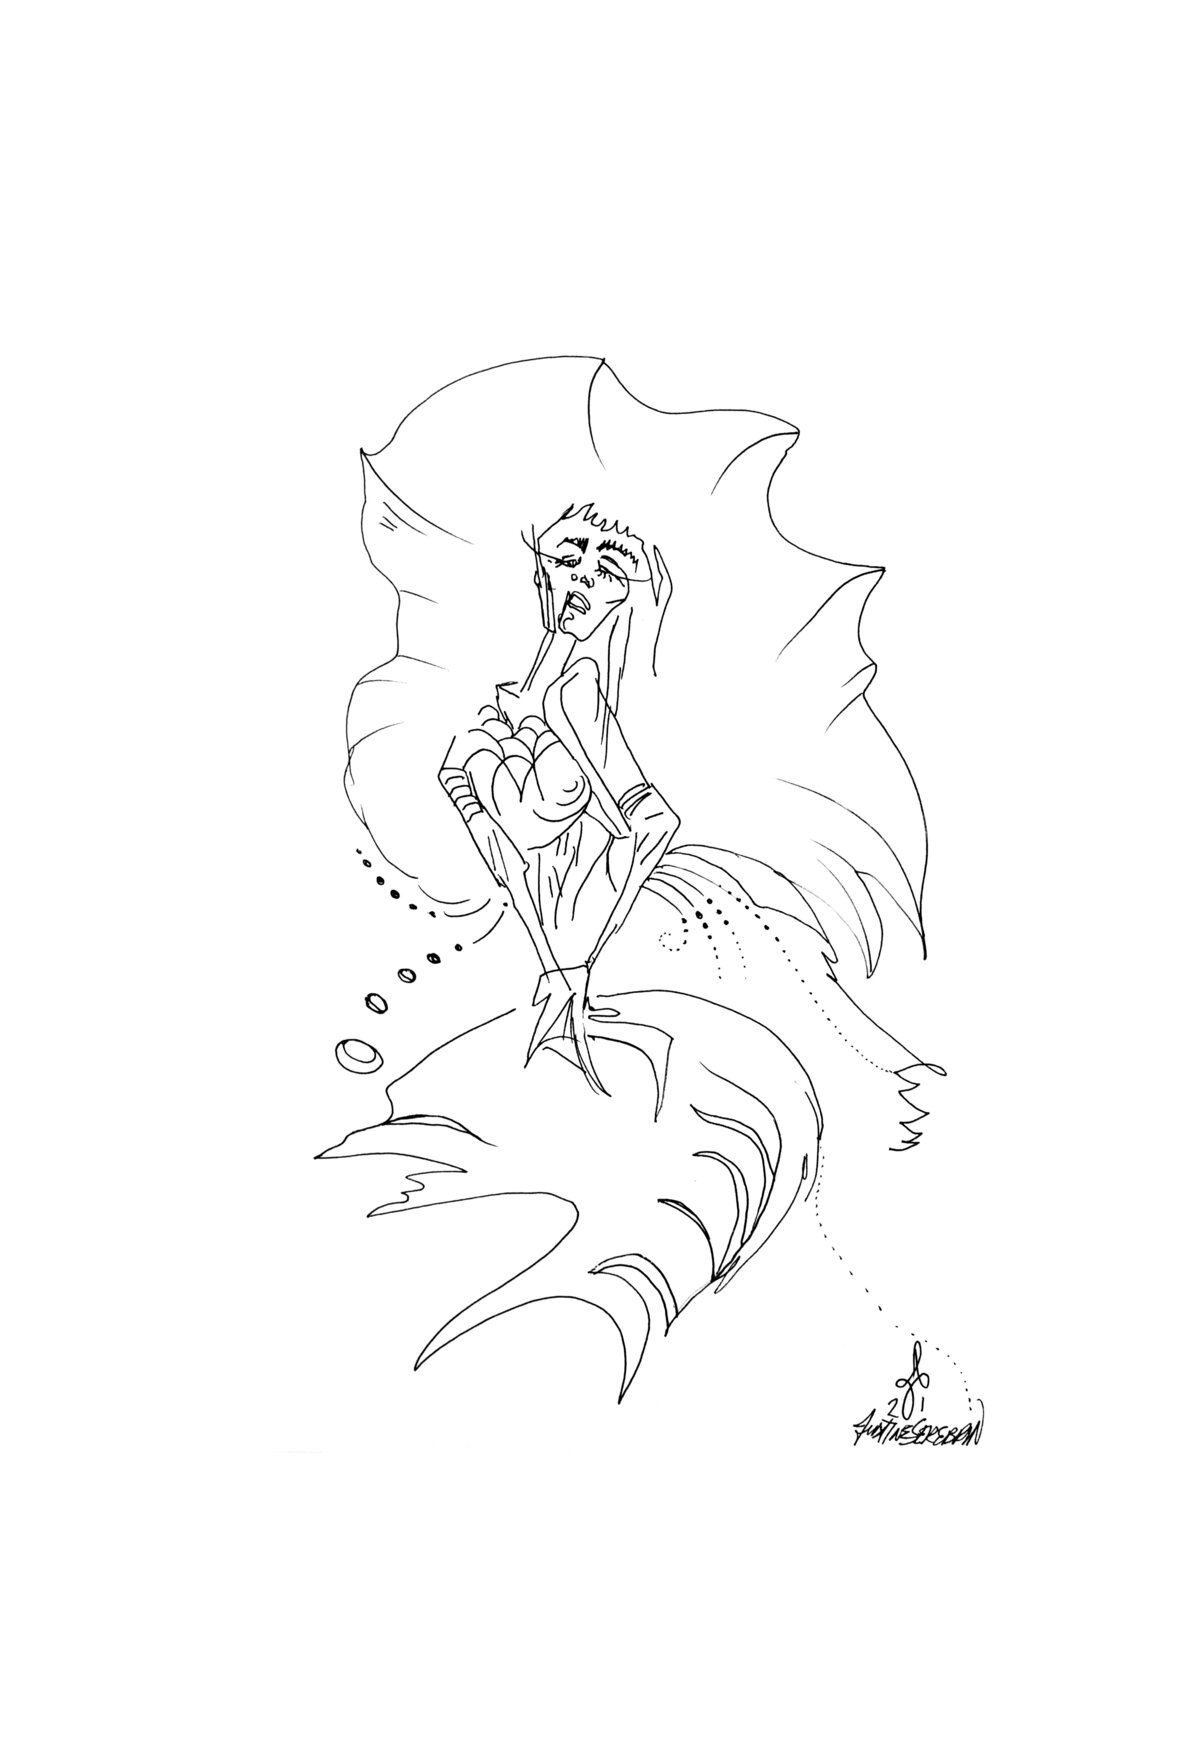 drawing 2.21 seashell dancer (1)